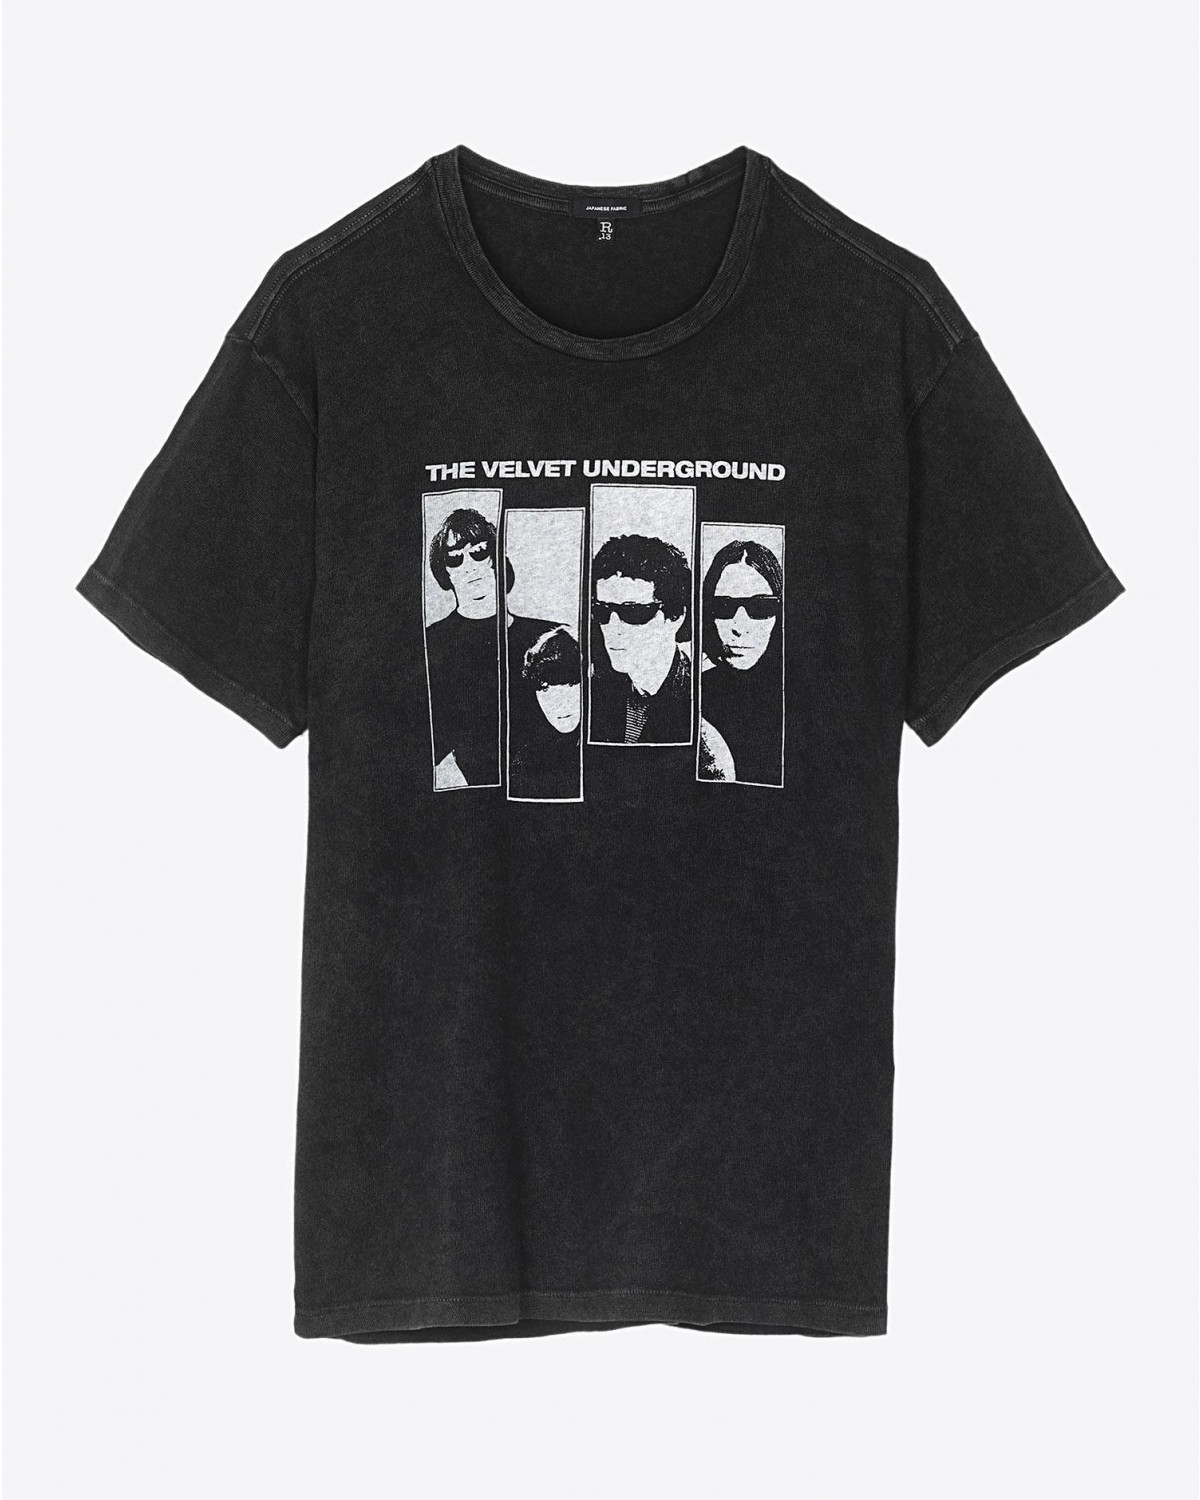 Tee Shirt R13 Denim Collection Velvet Underground Group Shot Boy T - Acid Black
